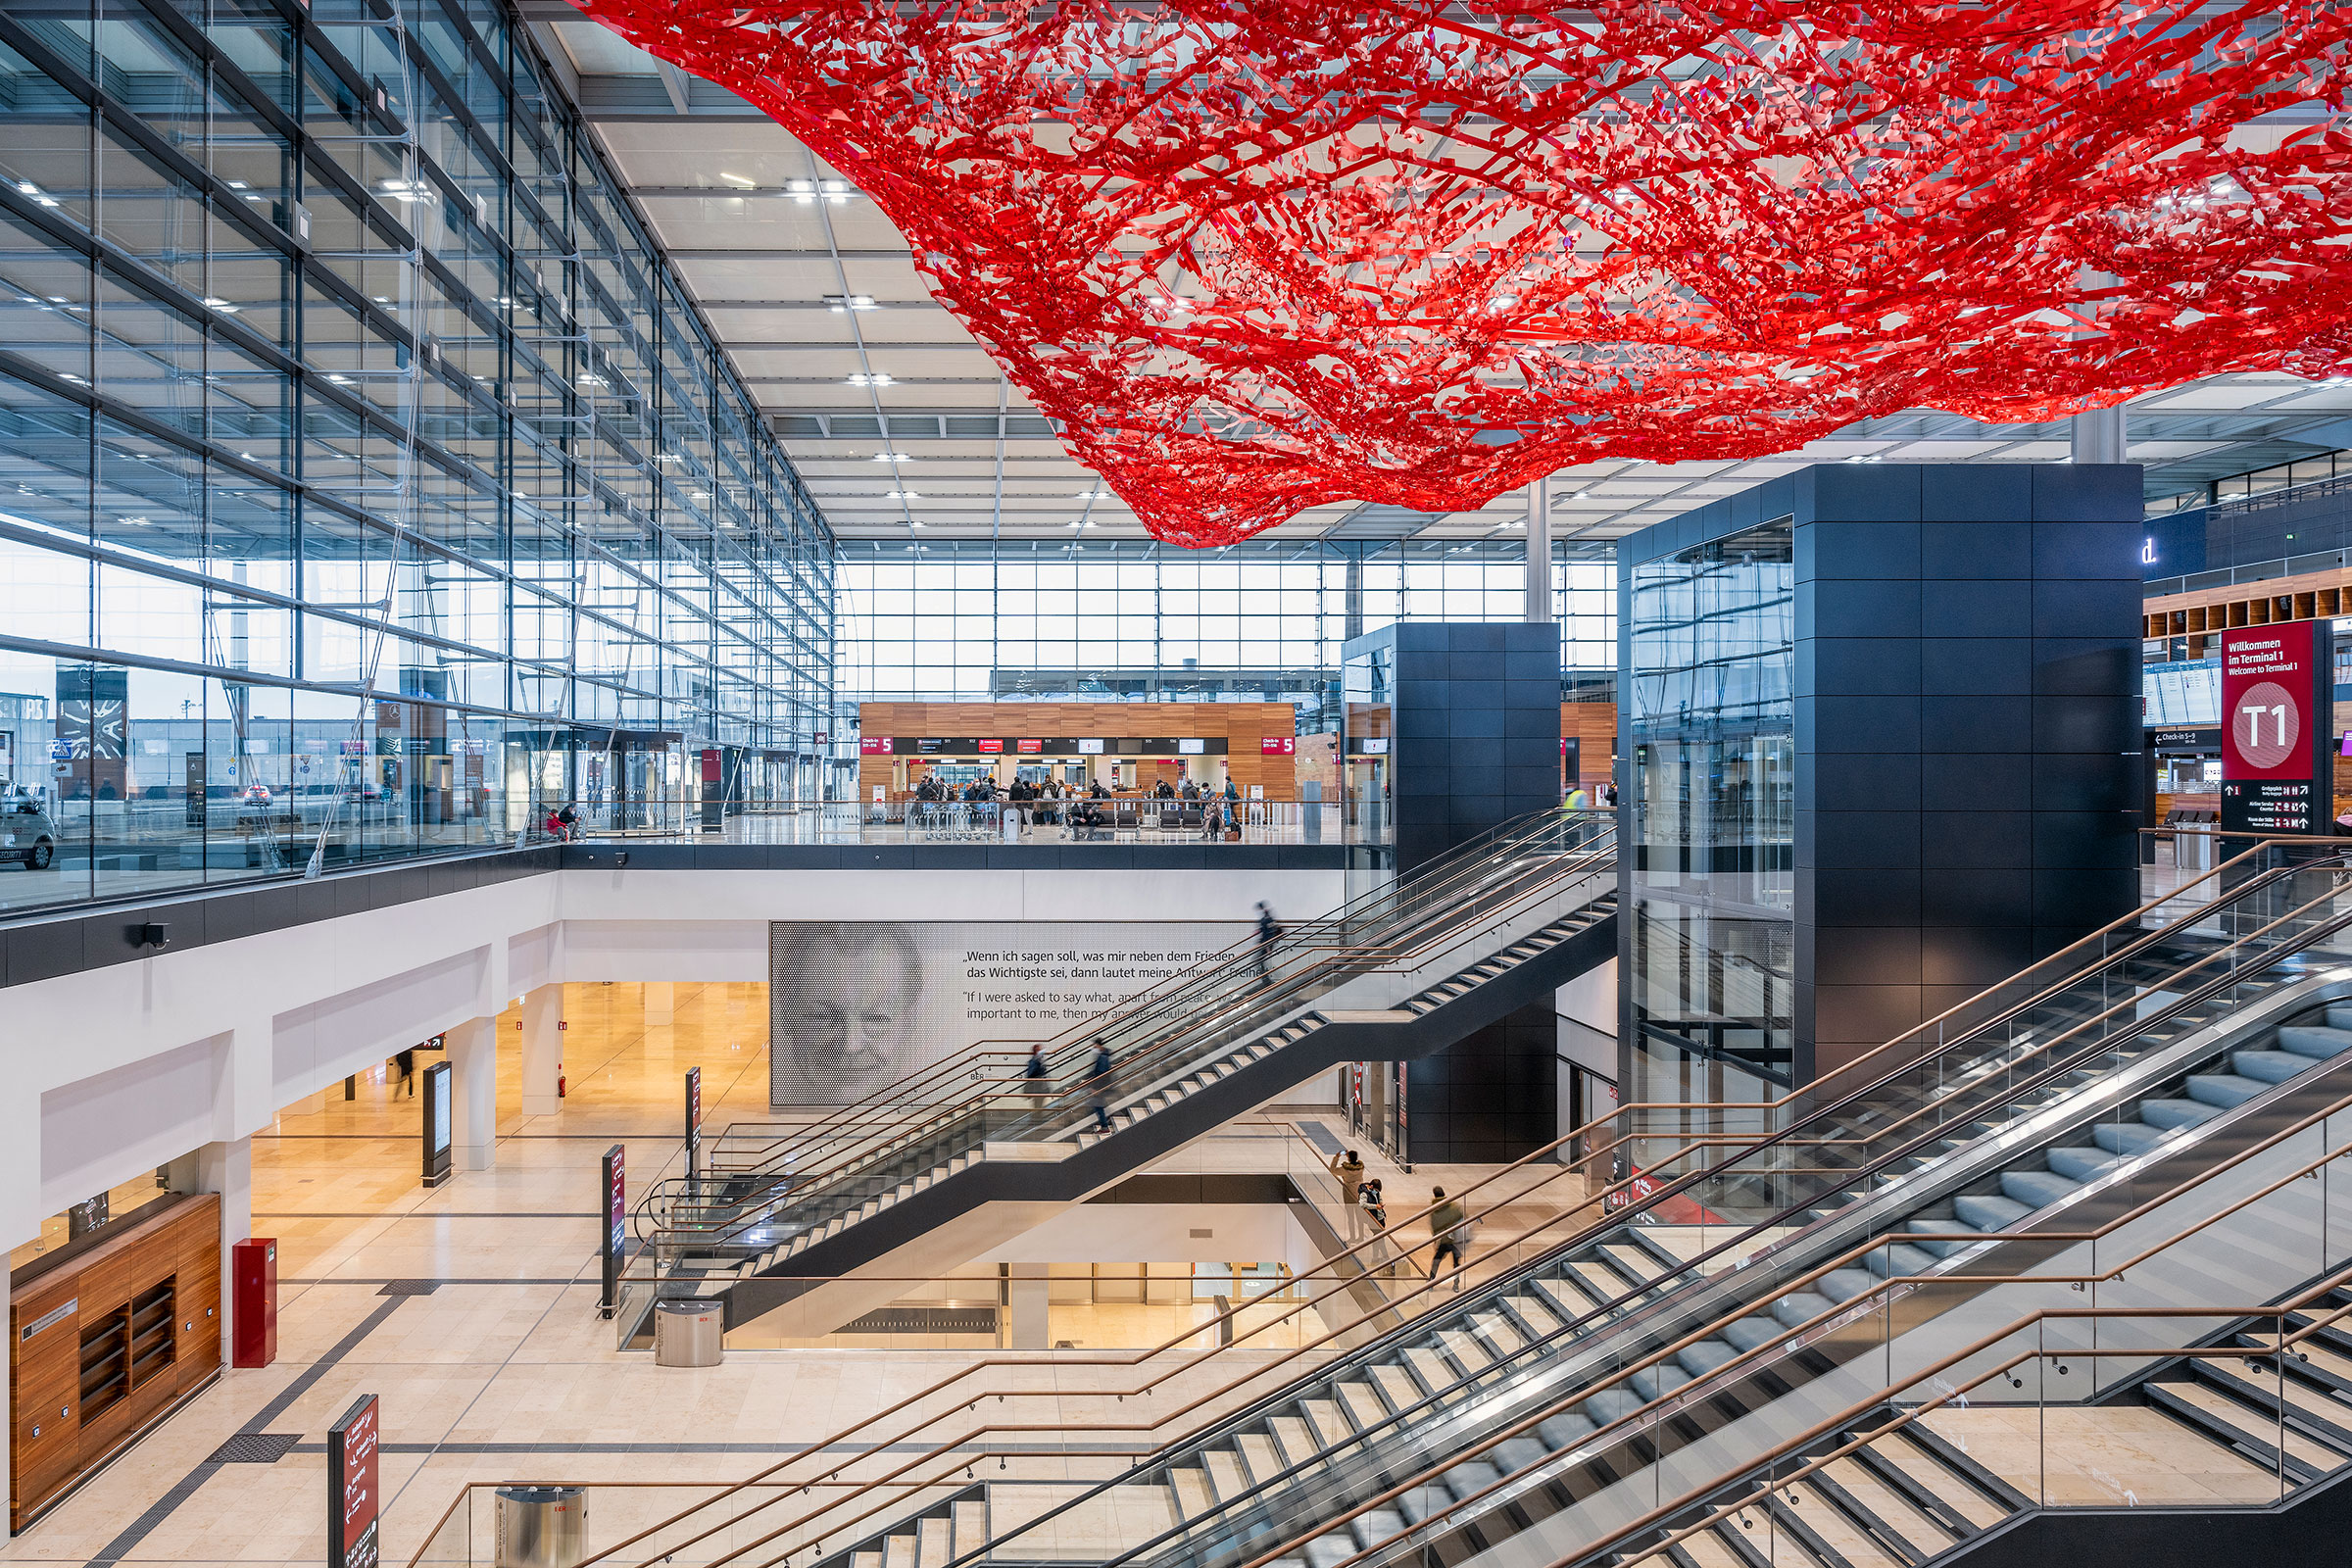 Terminal 1 at the Berlin Brandenburg Airport, where artist Pae White's “The Magic Carpet” hangs on the ceiling. (Courtesy Günter Wicker—Flughafen Berlin Brandenburg GmbH)